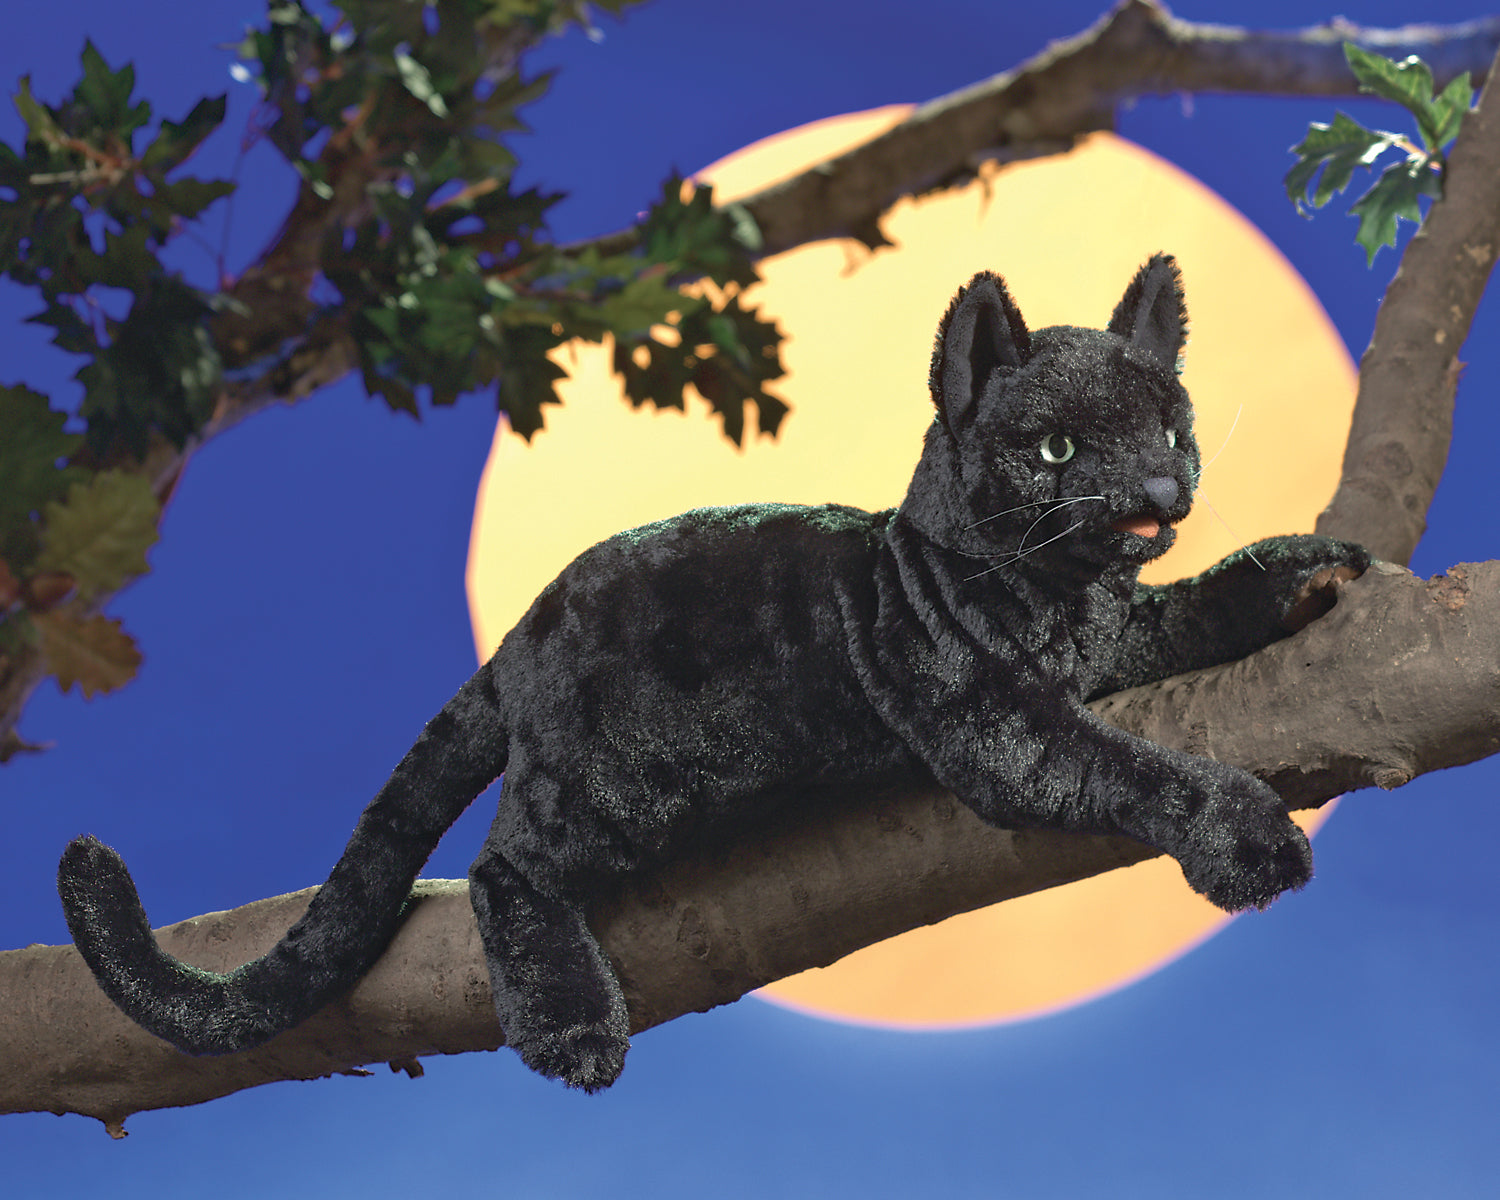 Folkmanis Puppet - Black Cat    